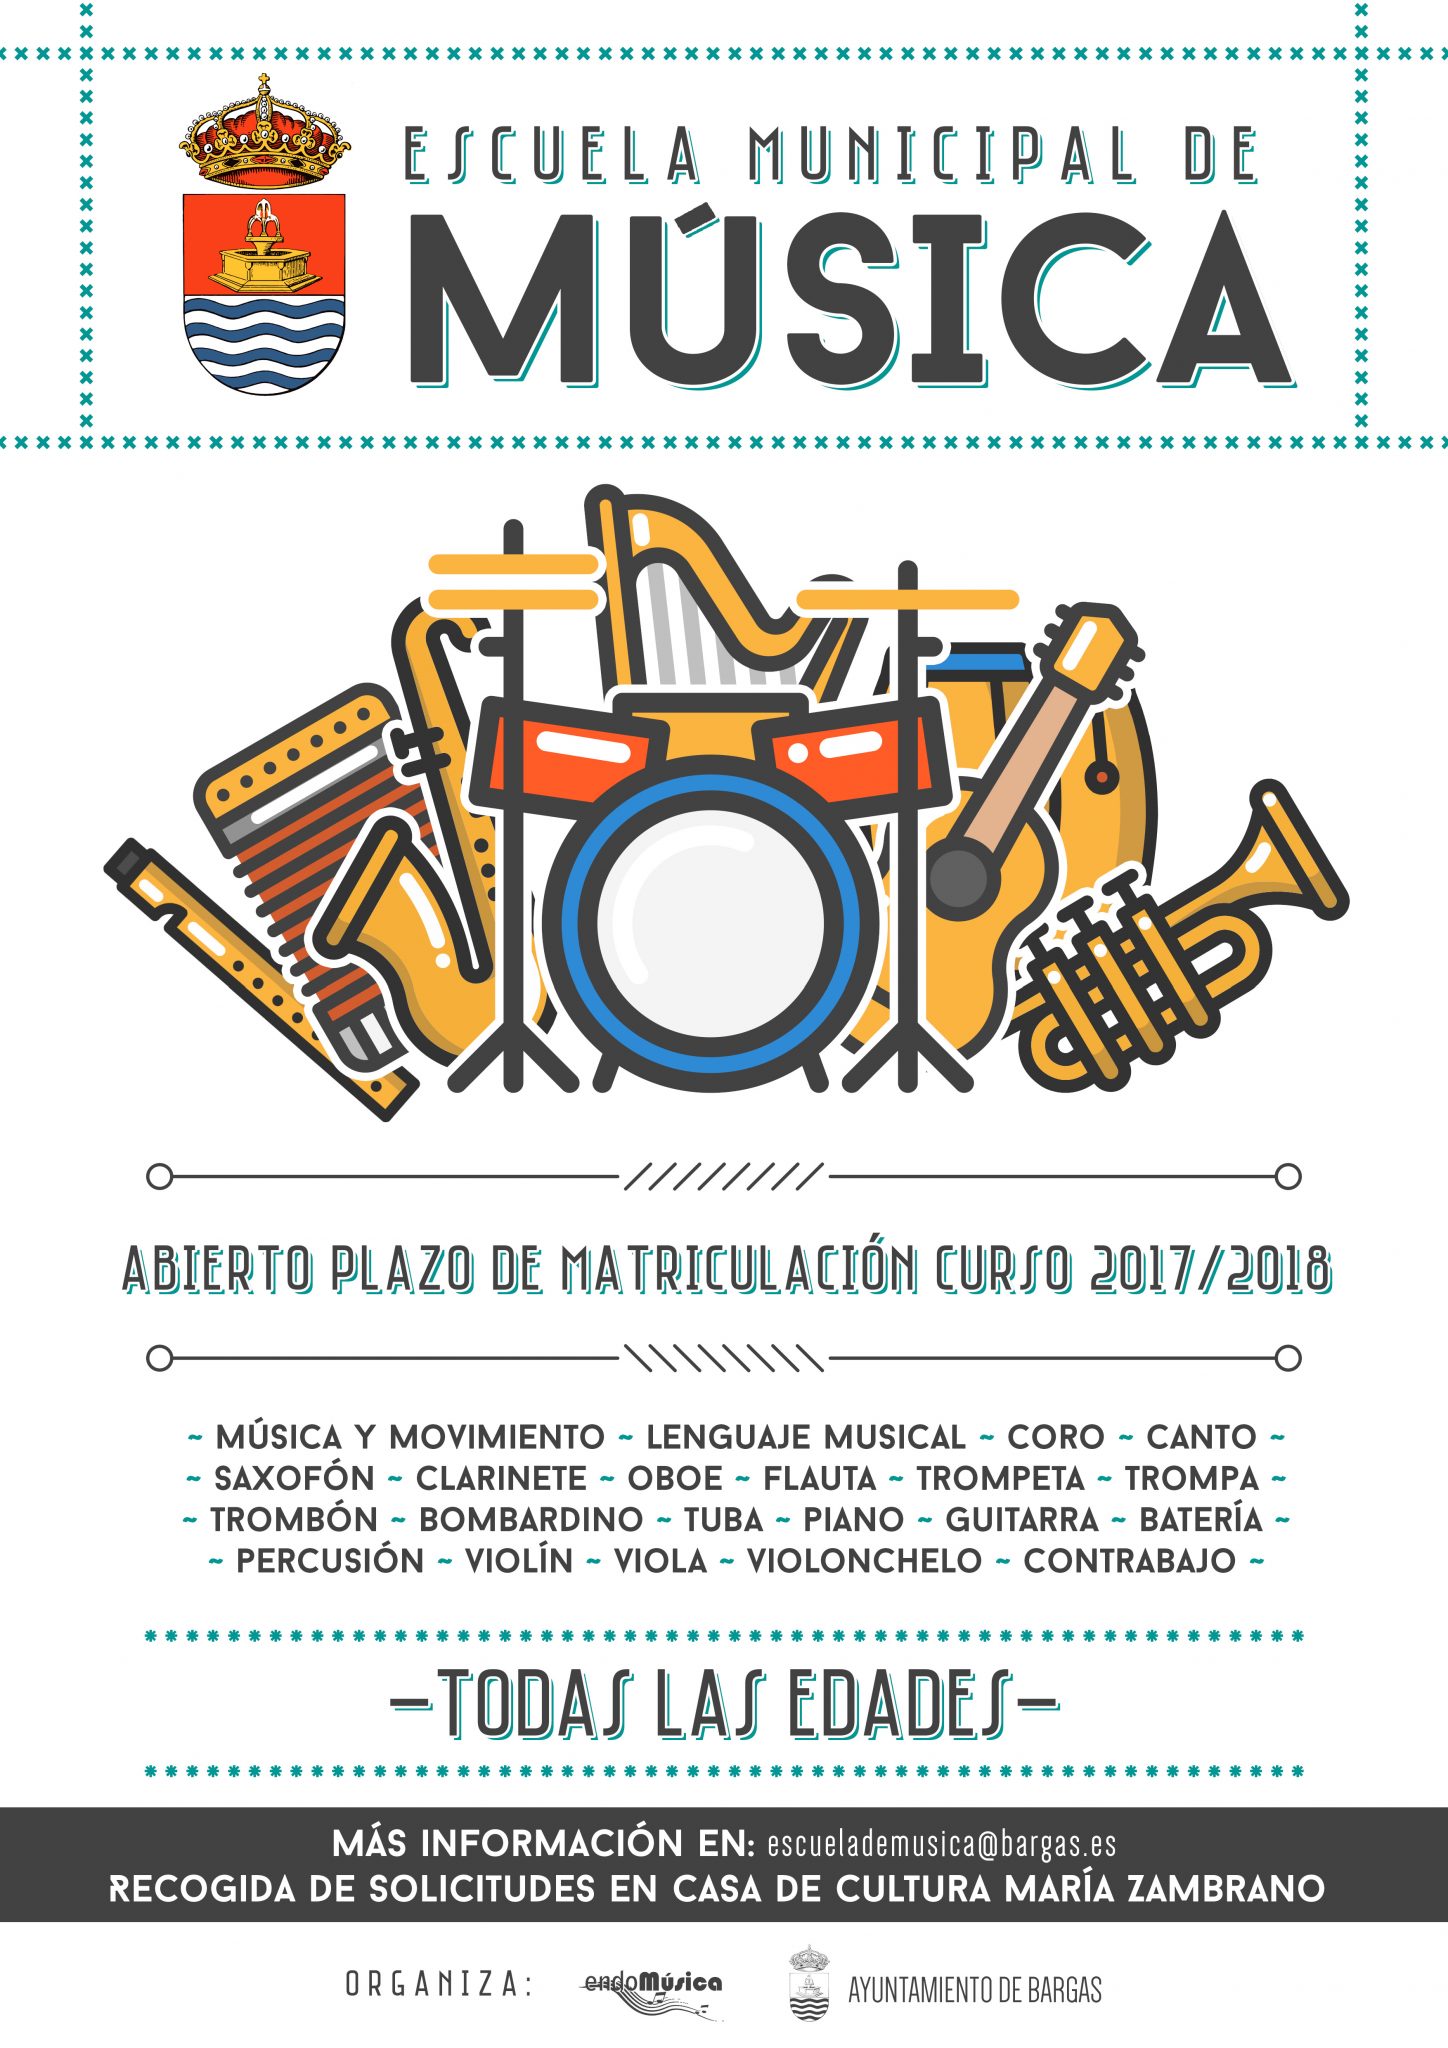 Escuela Municipal de Música